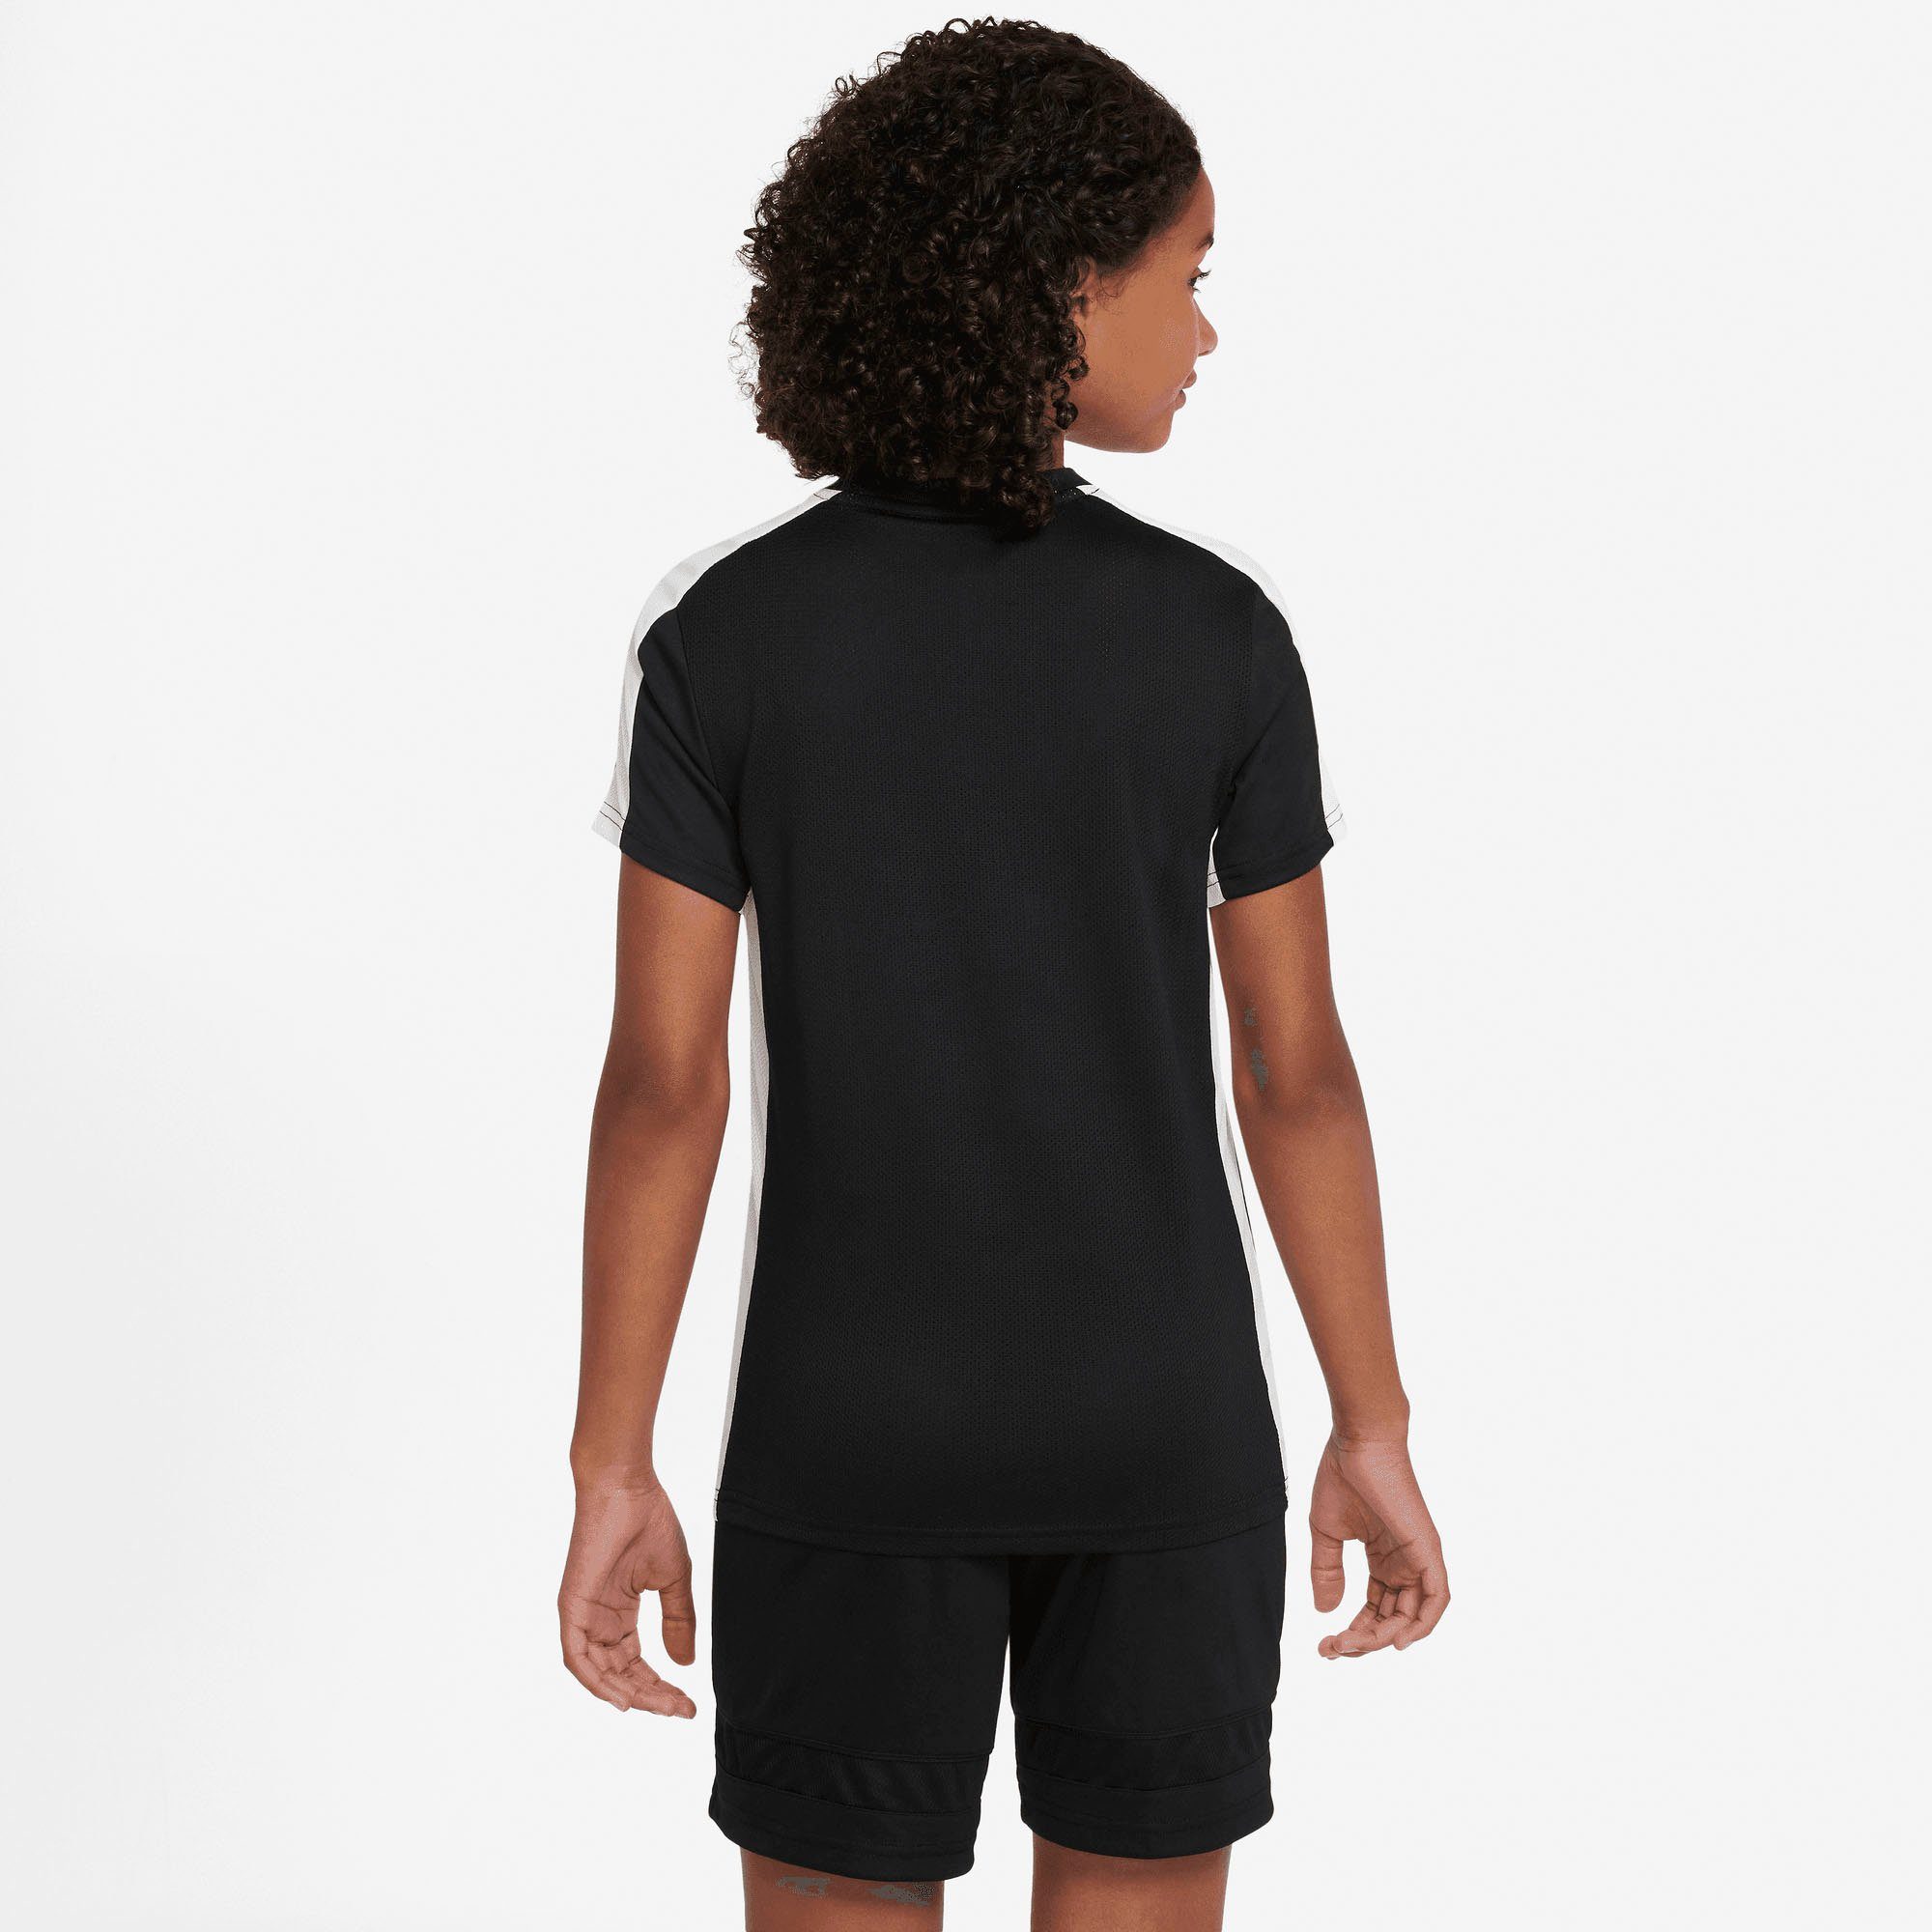 DRI-FIT KIDS' TOP Trainingsshirt BLACK/WHITE/WHITE Nike ACADEMY